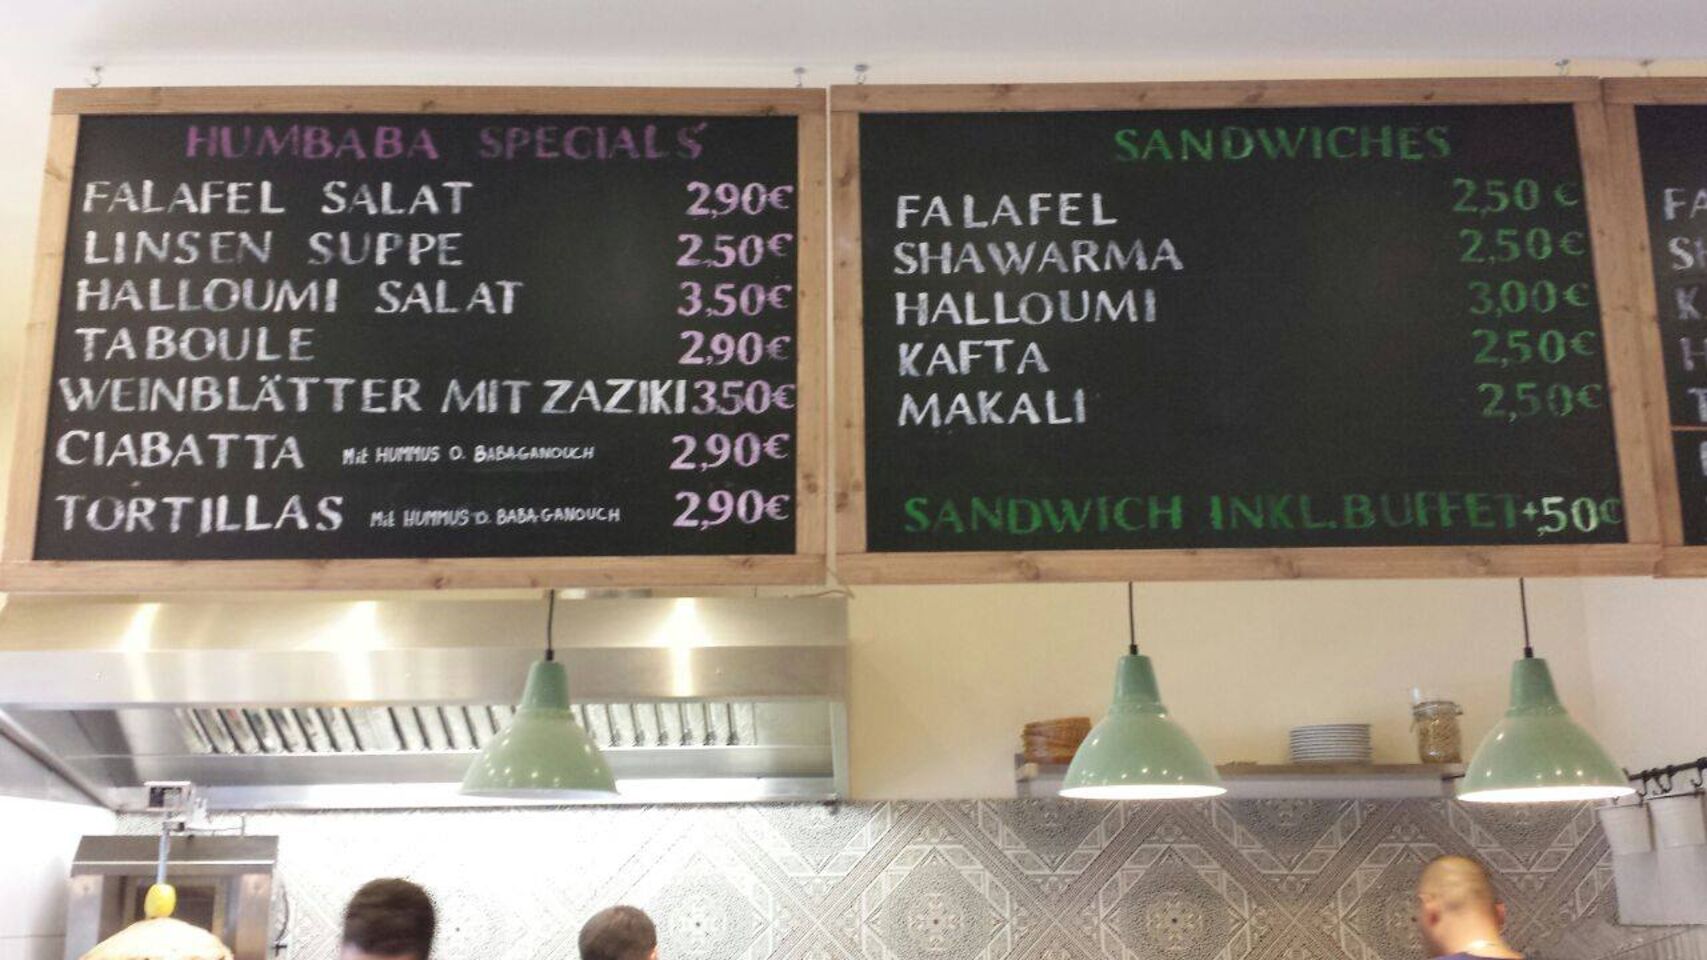 A photo of Falafel Humbaba